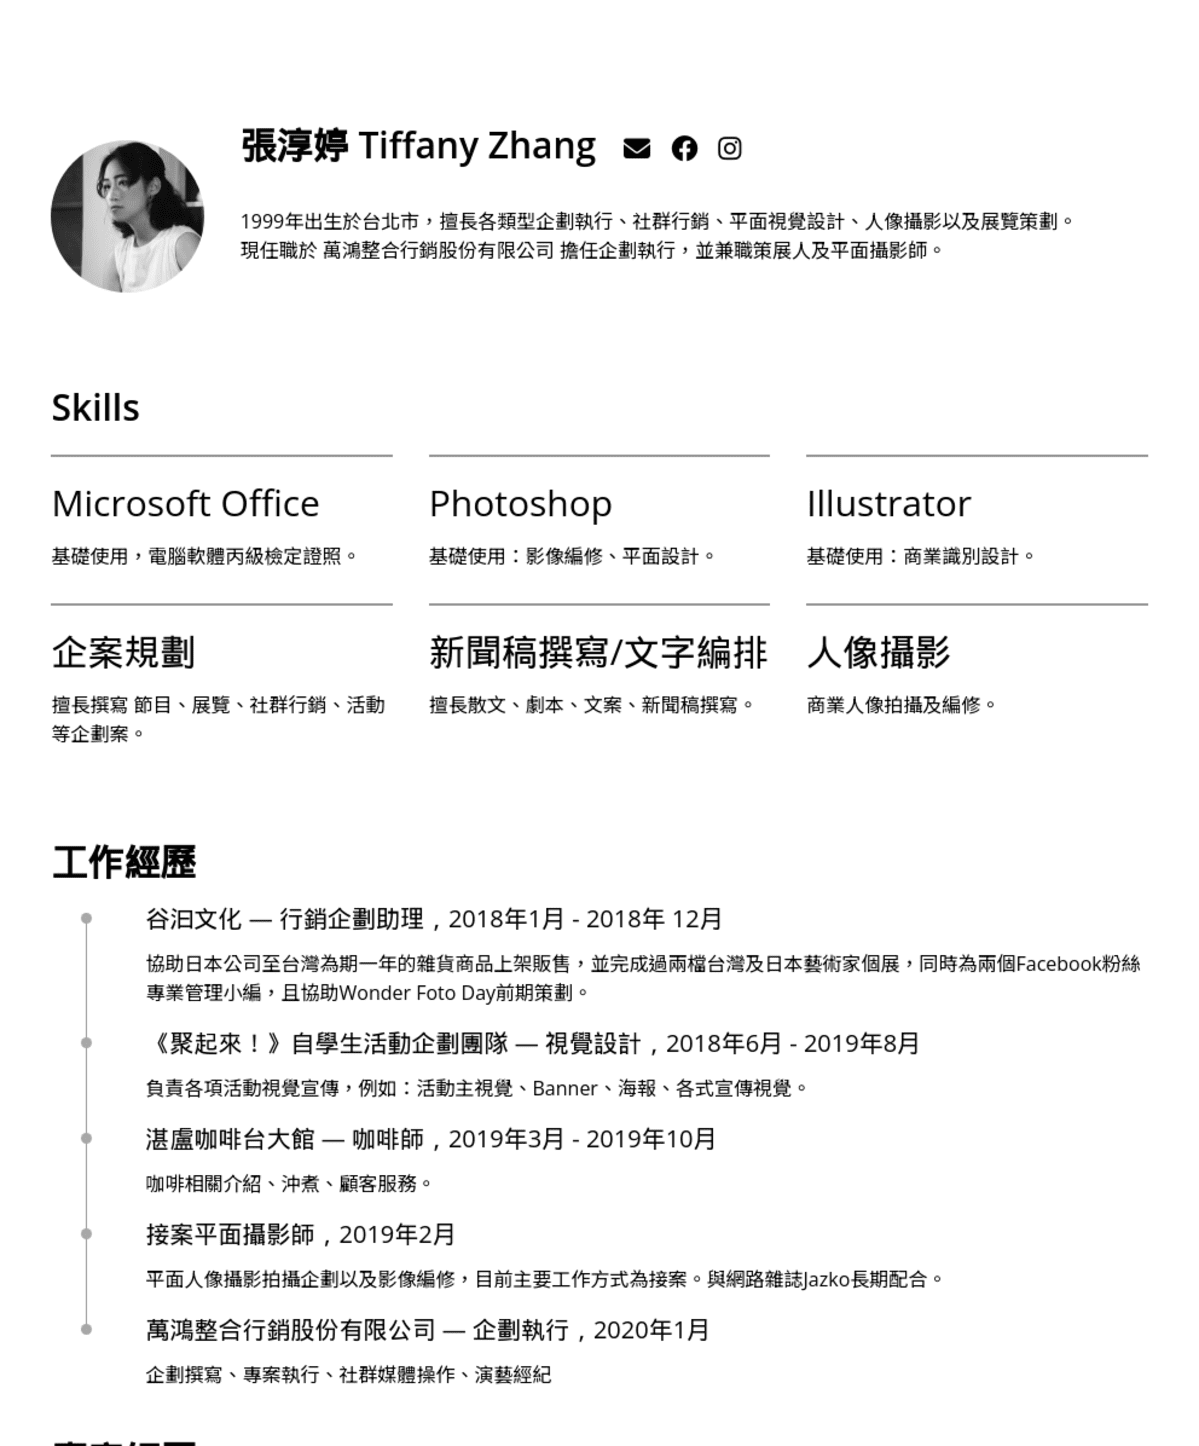 Tiffany Zhang, 企劃執行@萬鴻整合行銷股份有限公司